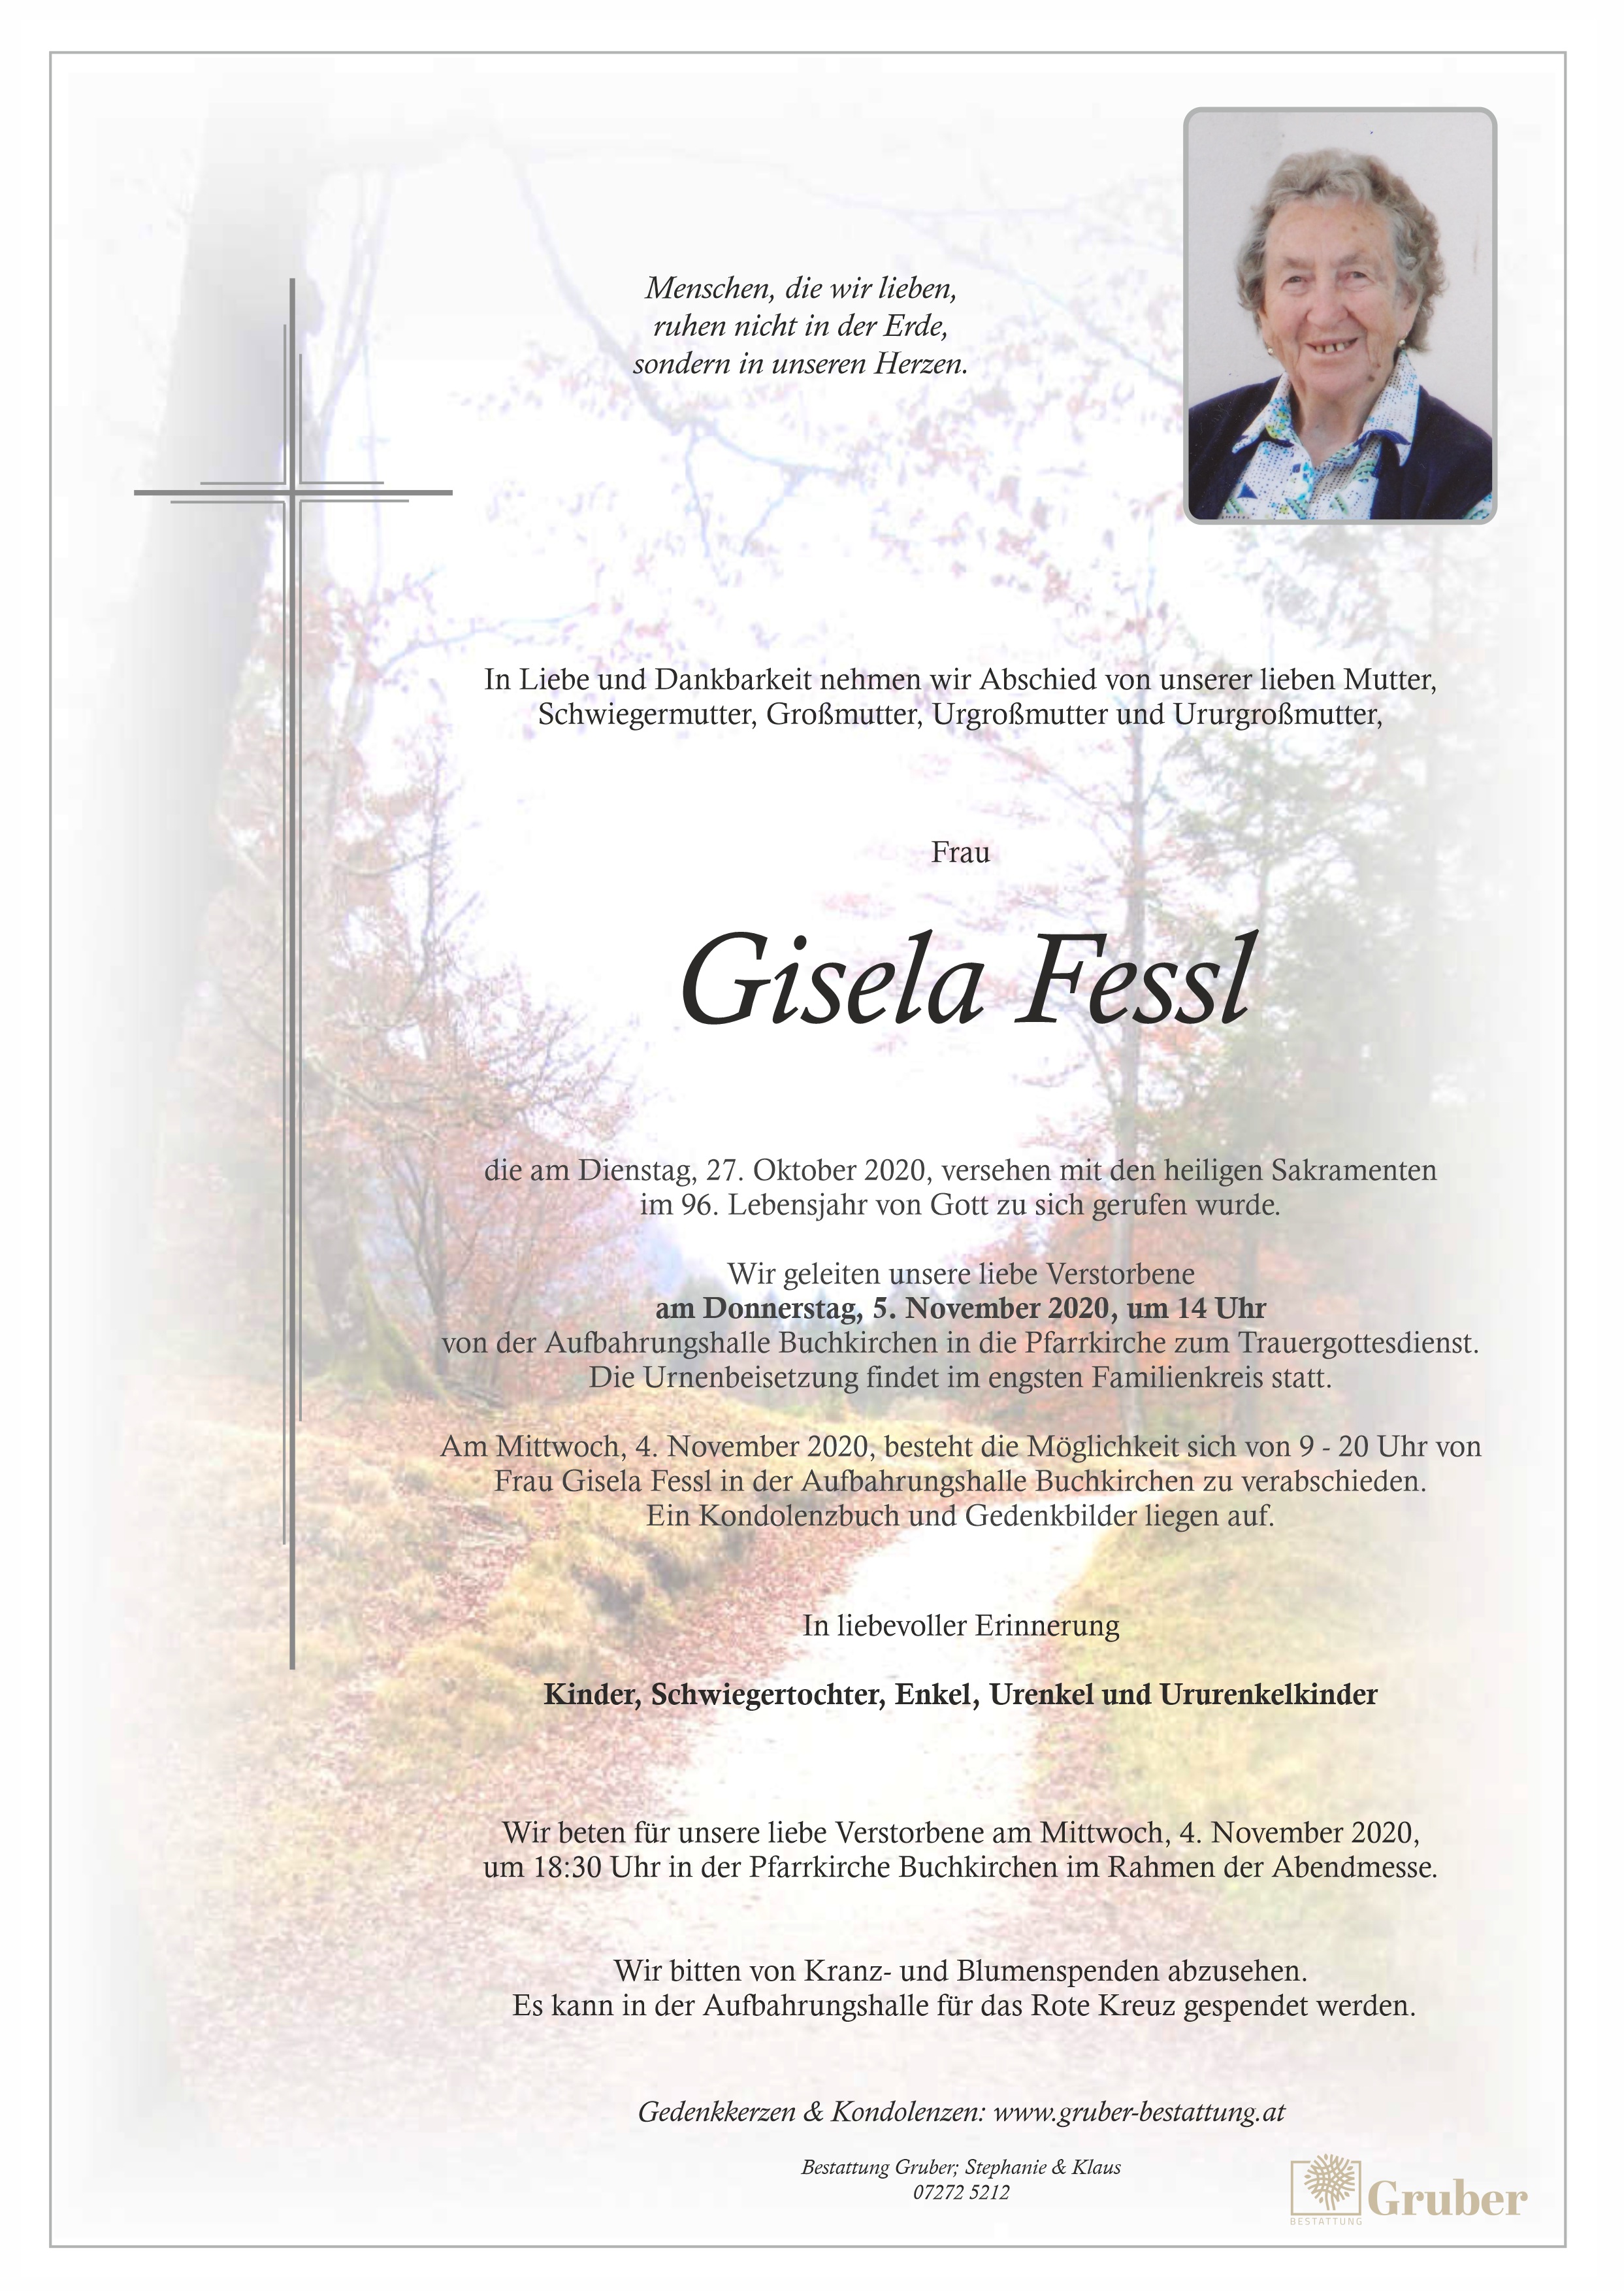 Gisela Fessl (Buchkirchen)